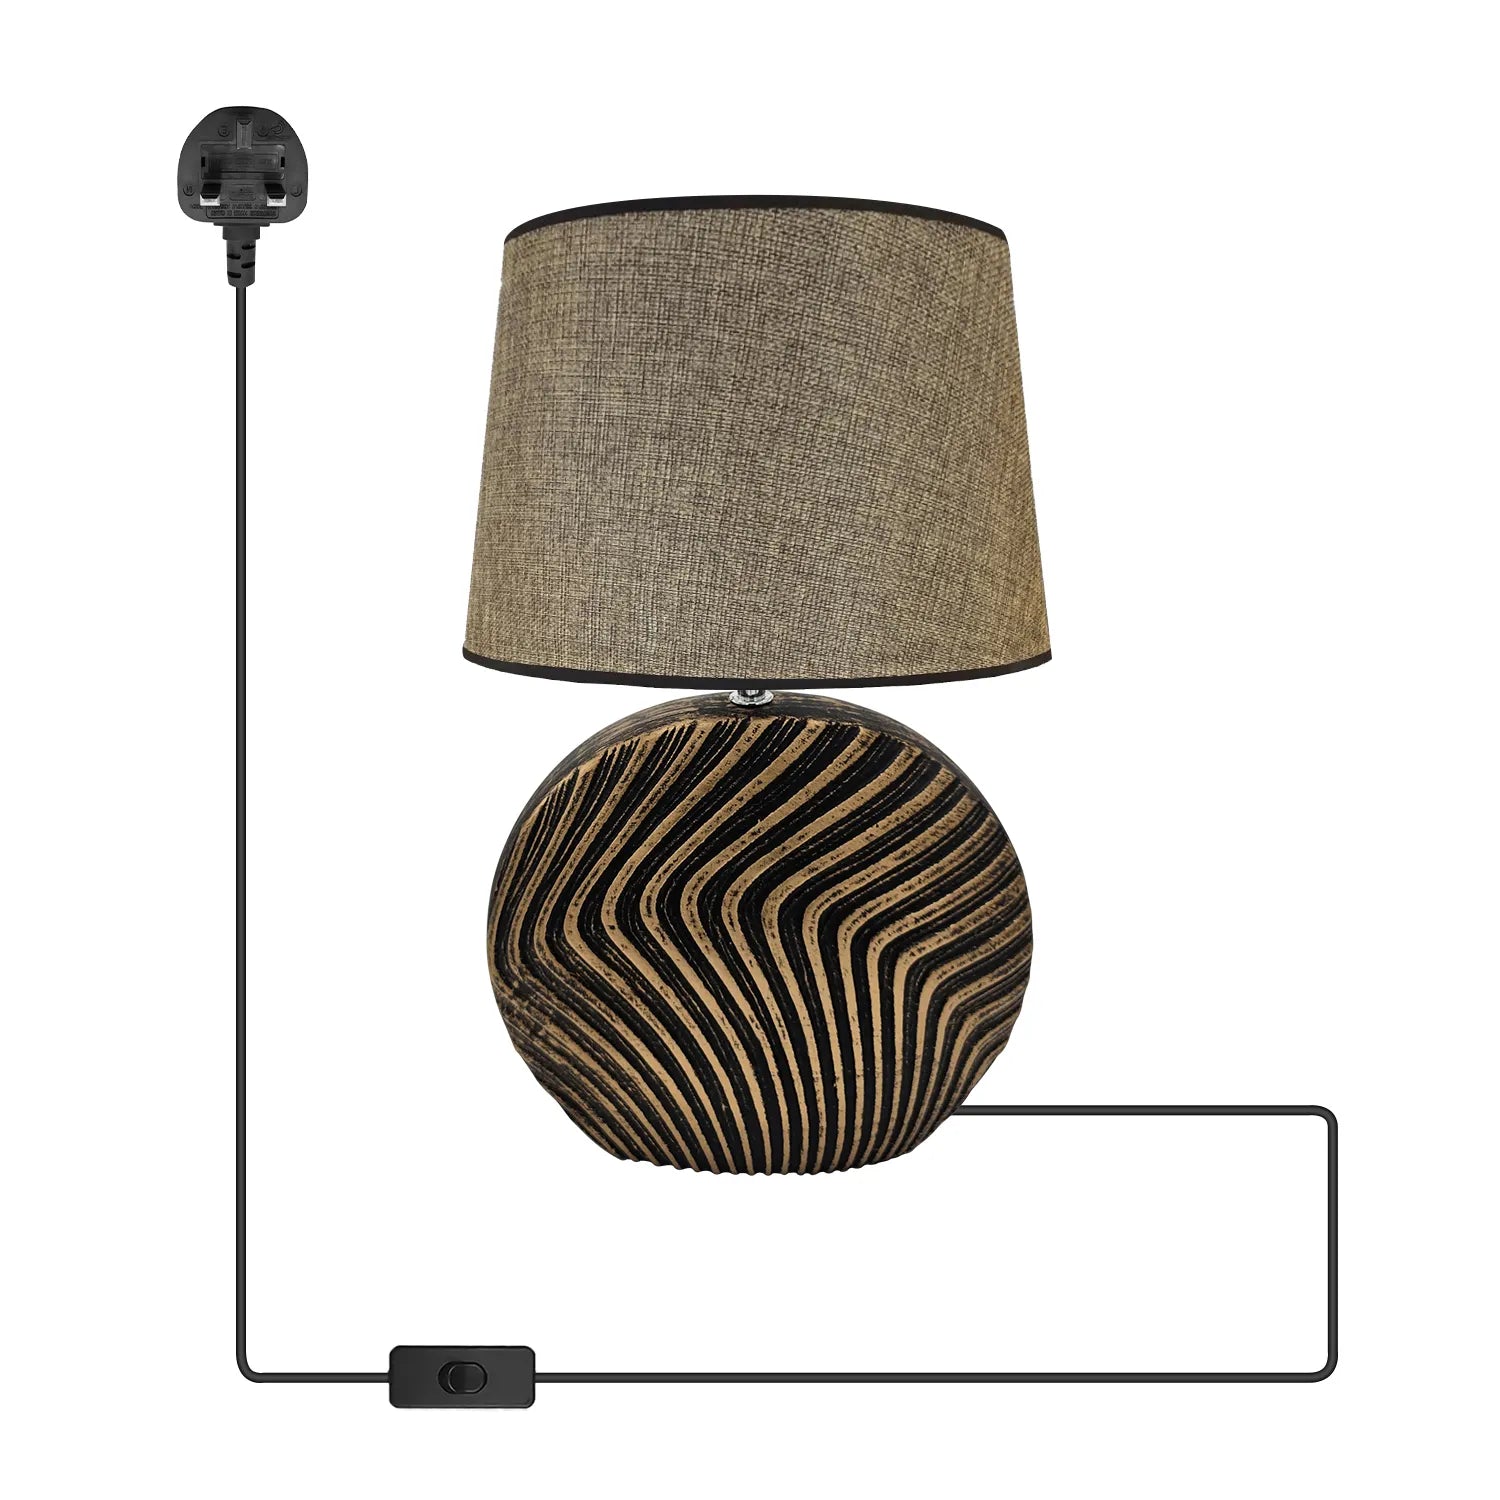 Plug in Tavle Lamp Coolie shade Modern Style lamp lighting